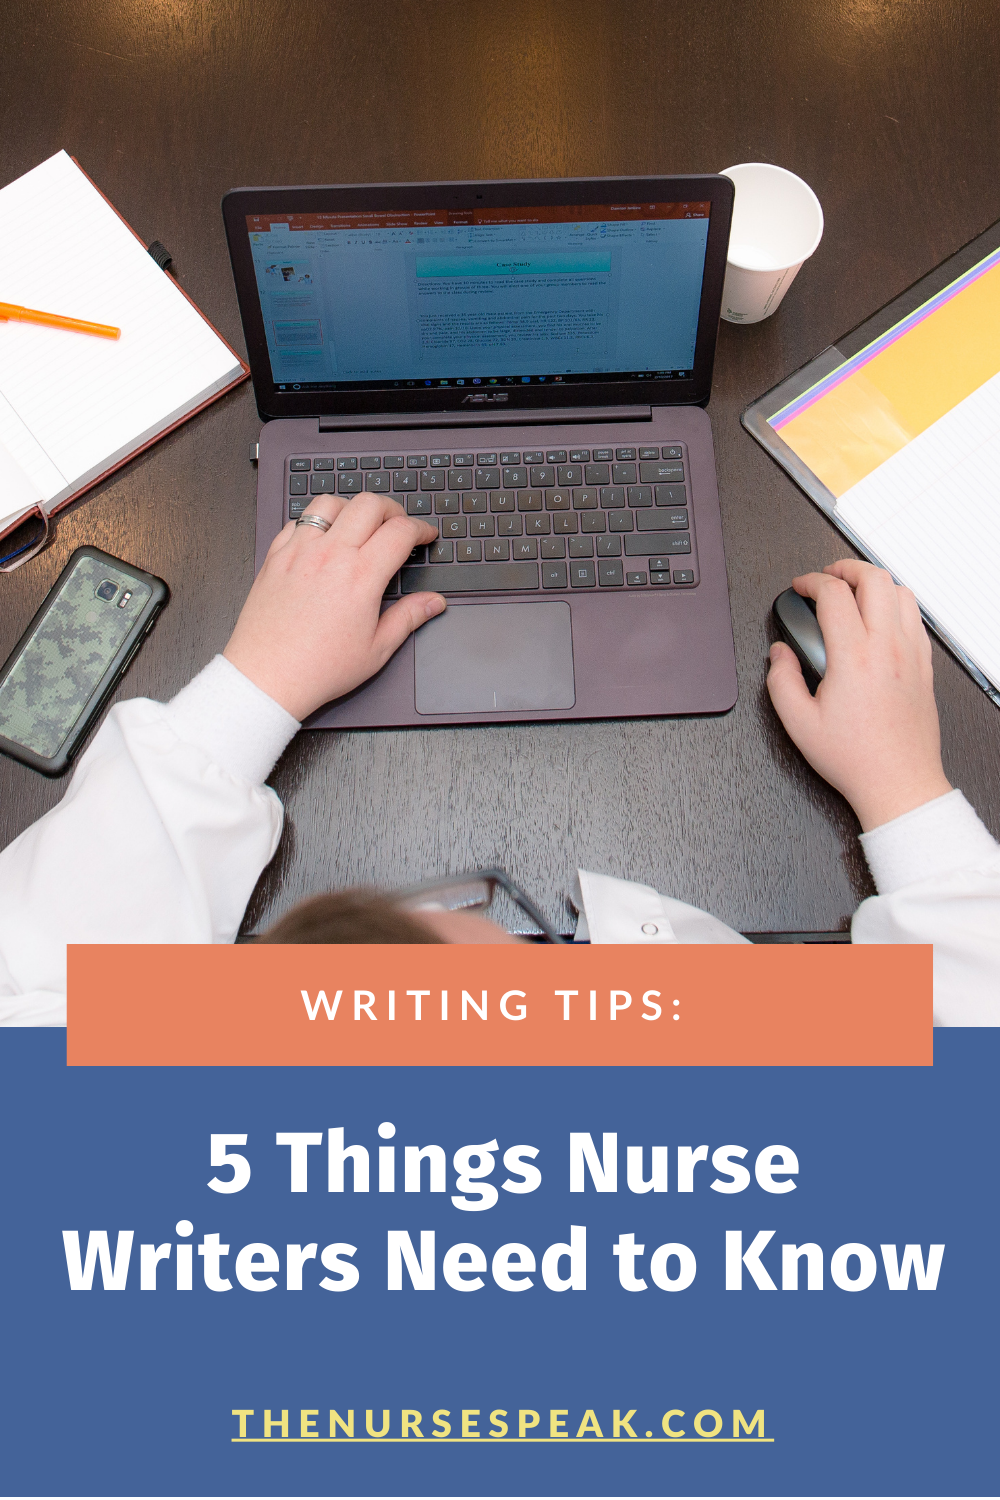 Writing Tips: 5 Things Nurse Writers Need to Know